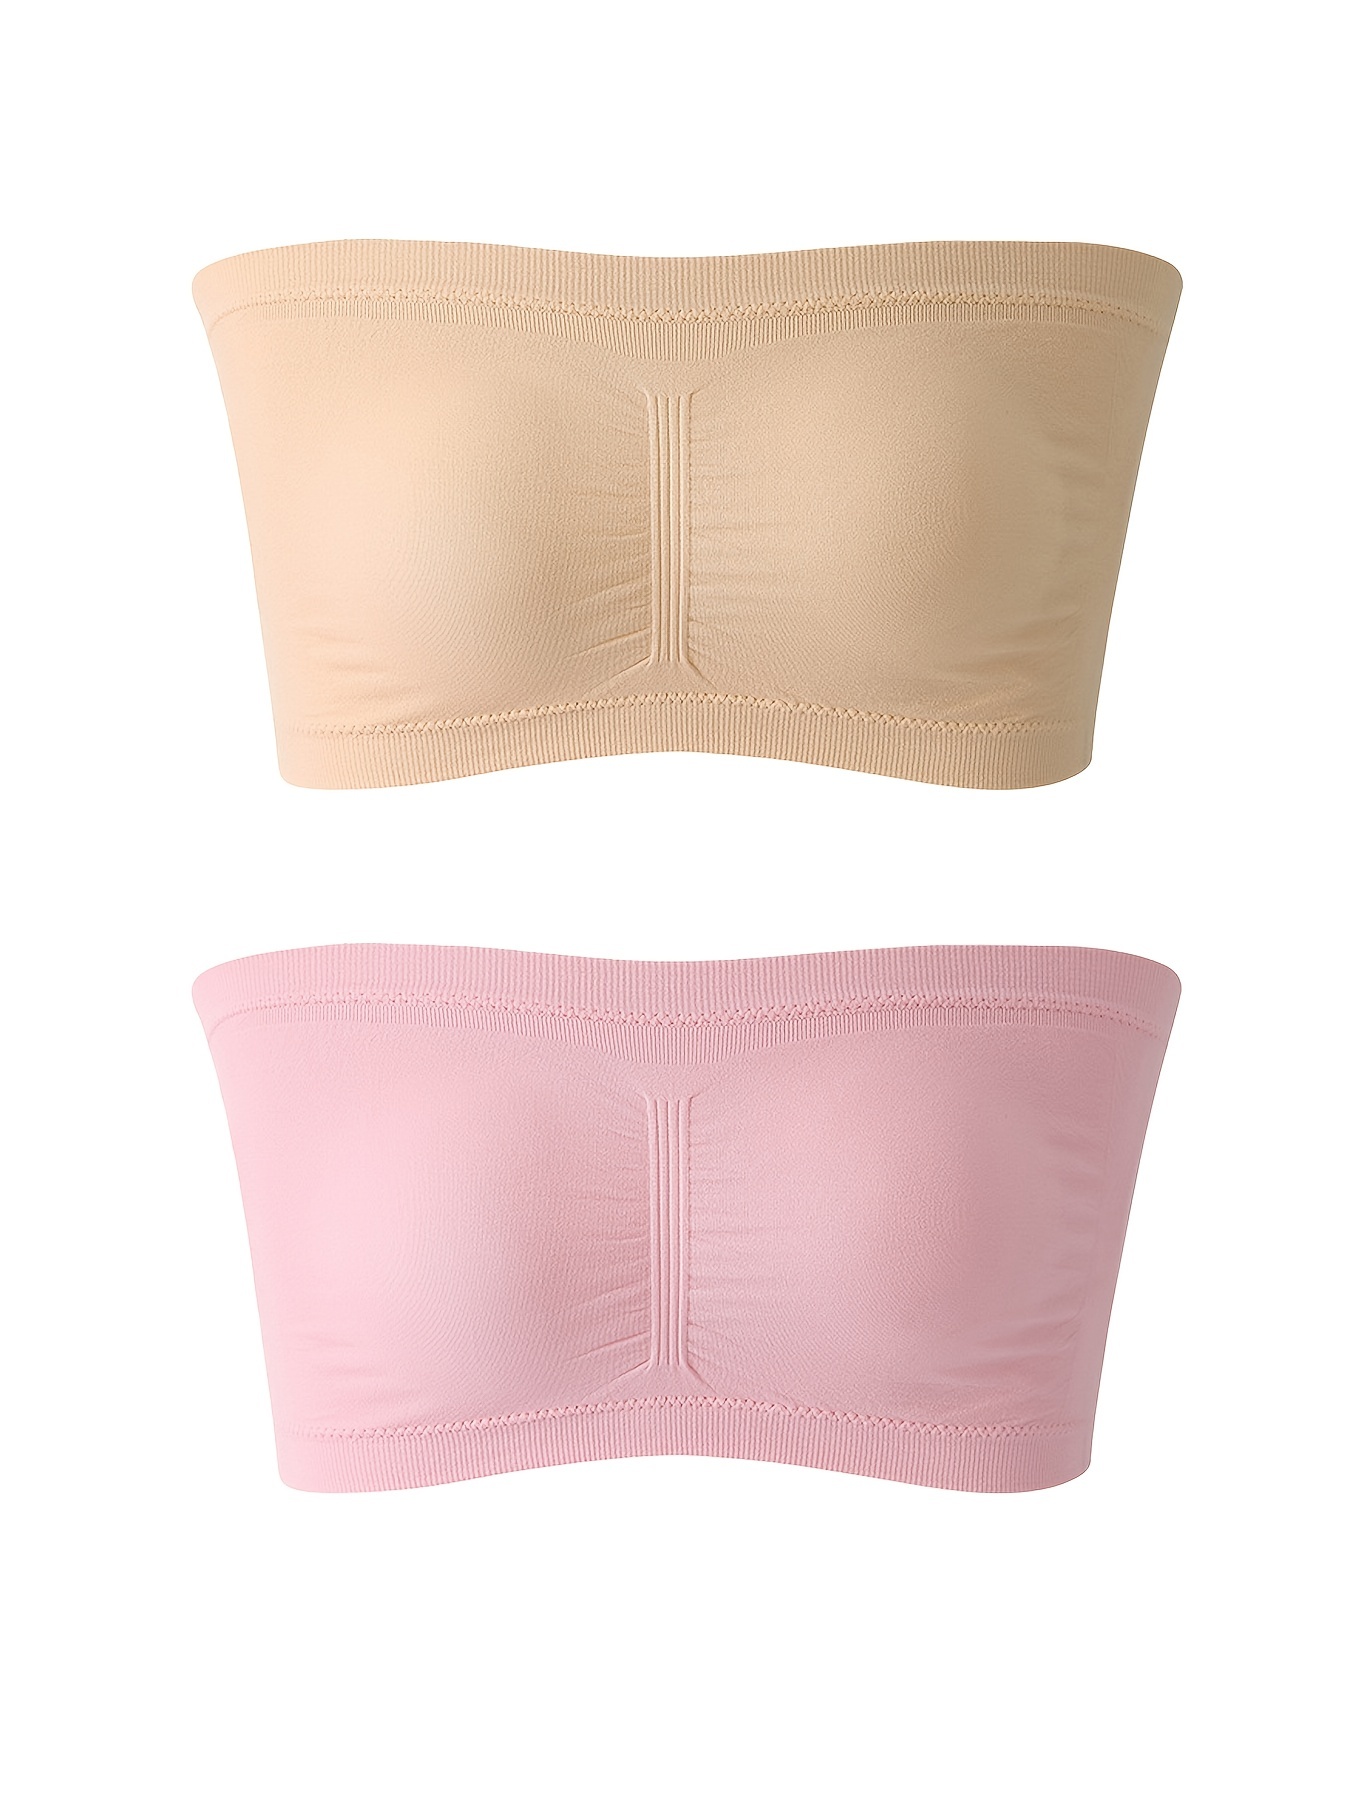 Bra Padded Wireless Strapless Bra For Women Bandeau Top Bra Comfort(pink